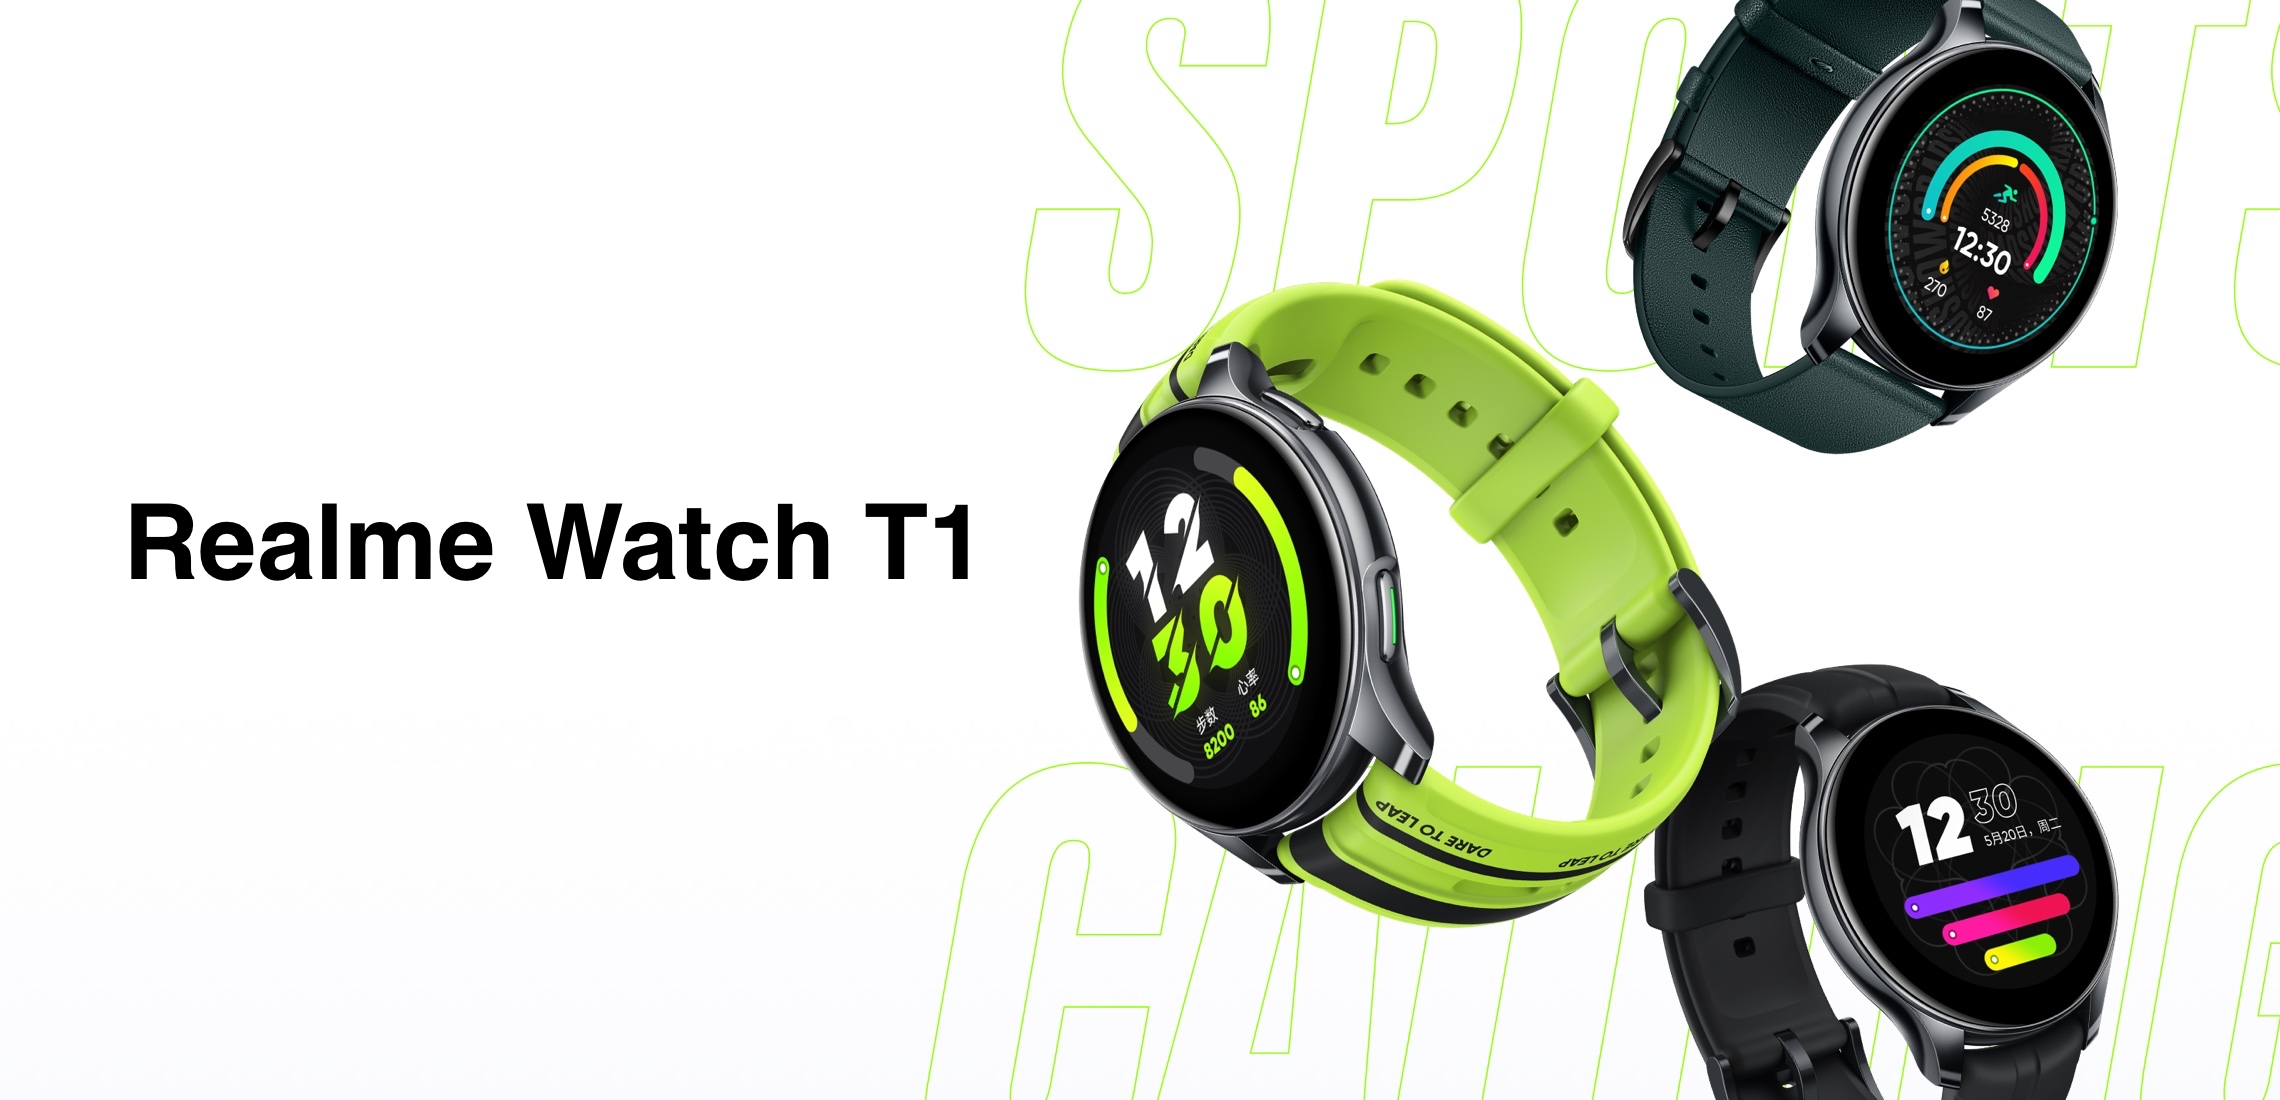 Realme Watch T1: Round AMOLED SpO2 sensor, 110 sport modes, NFC and battery life up to days for $110 | gagadget.com